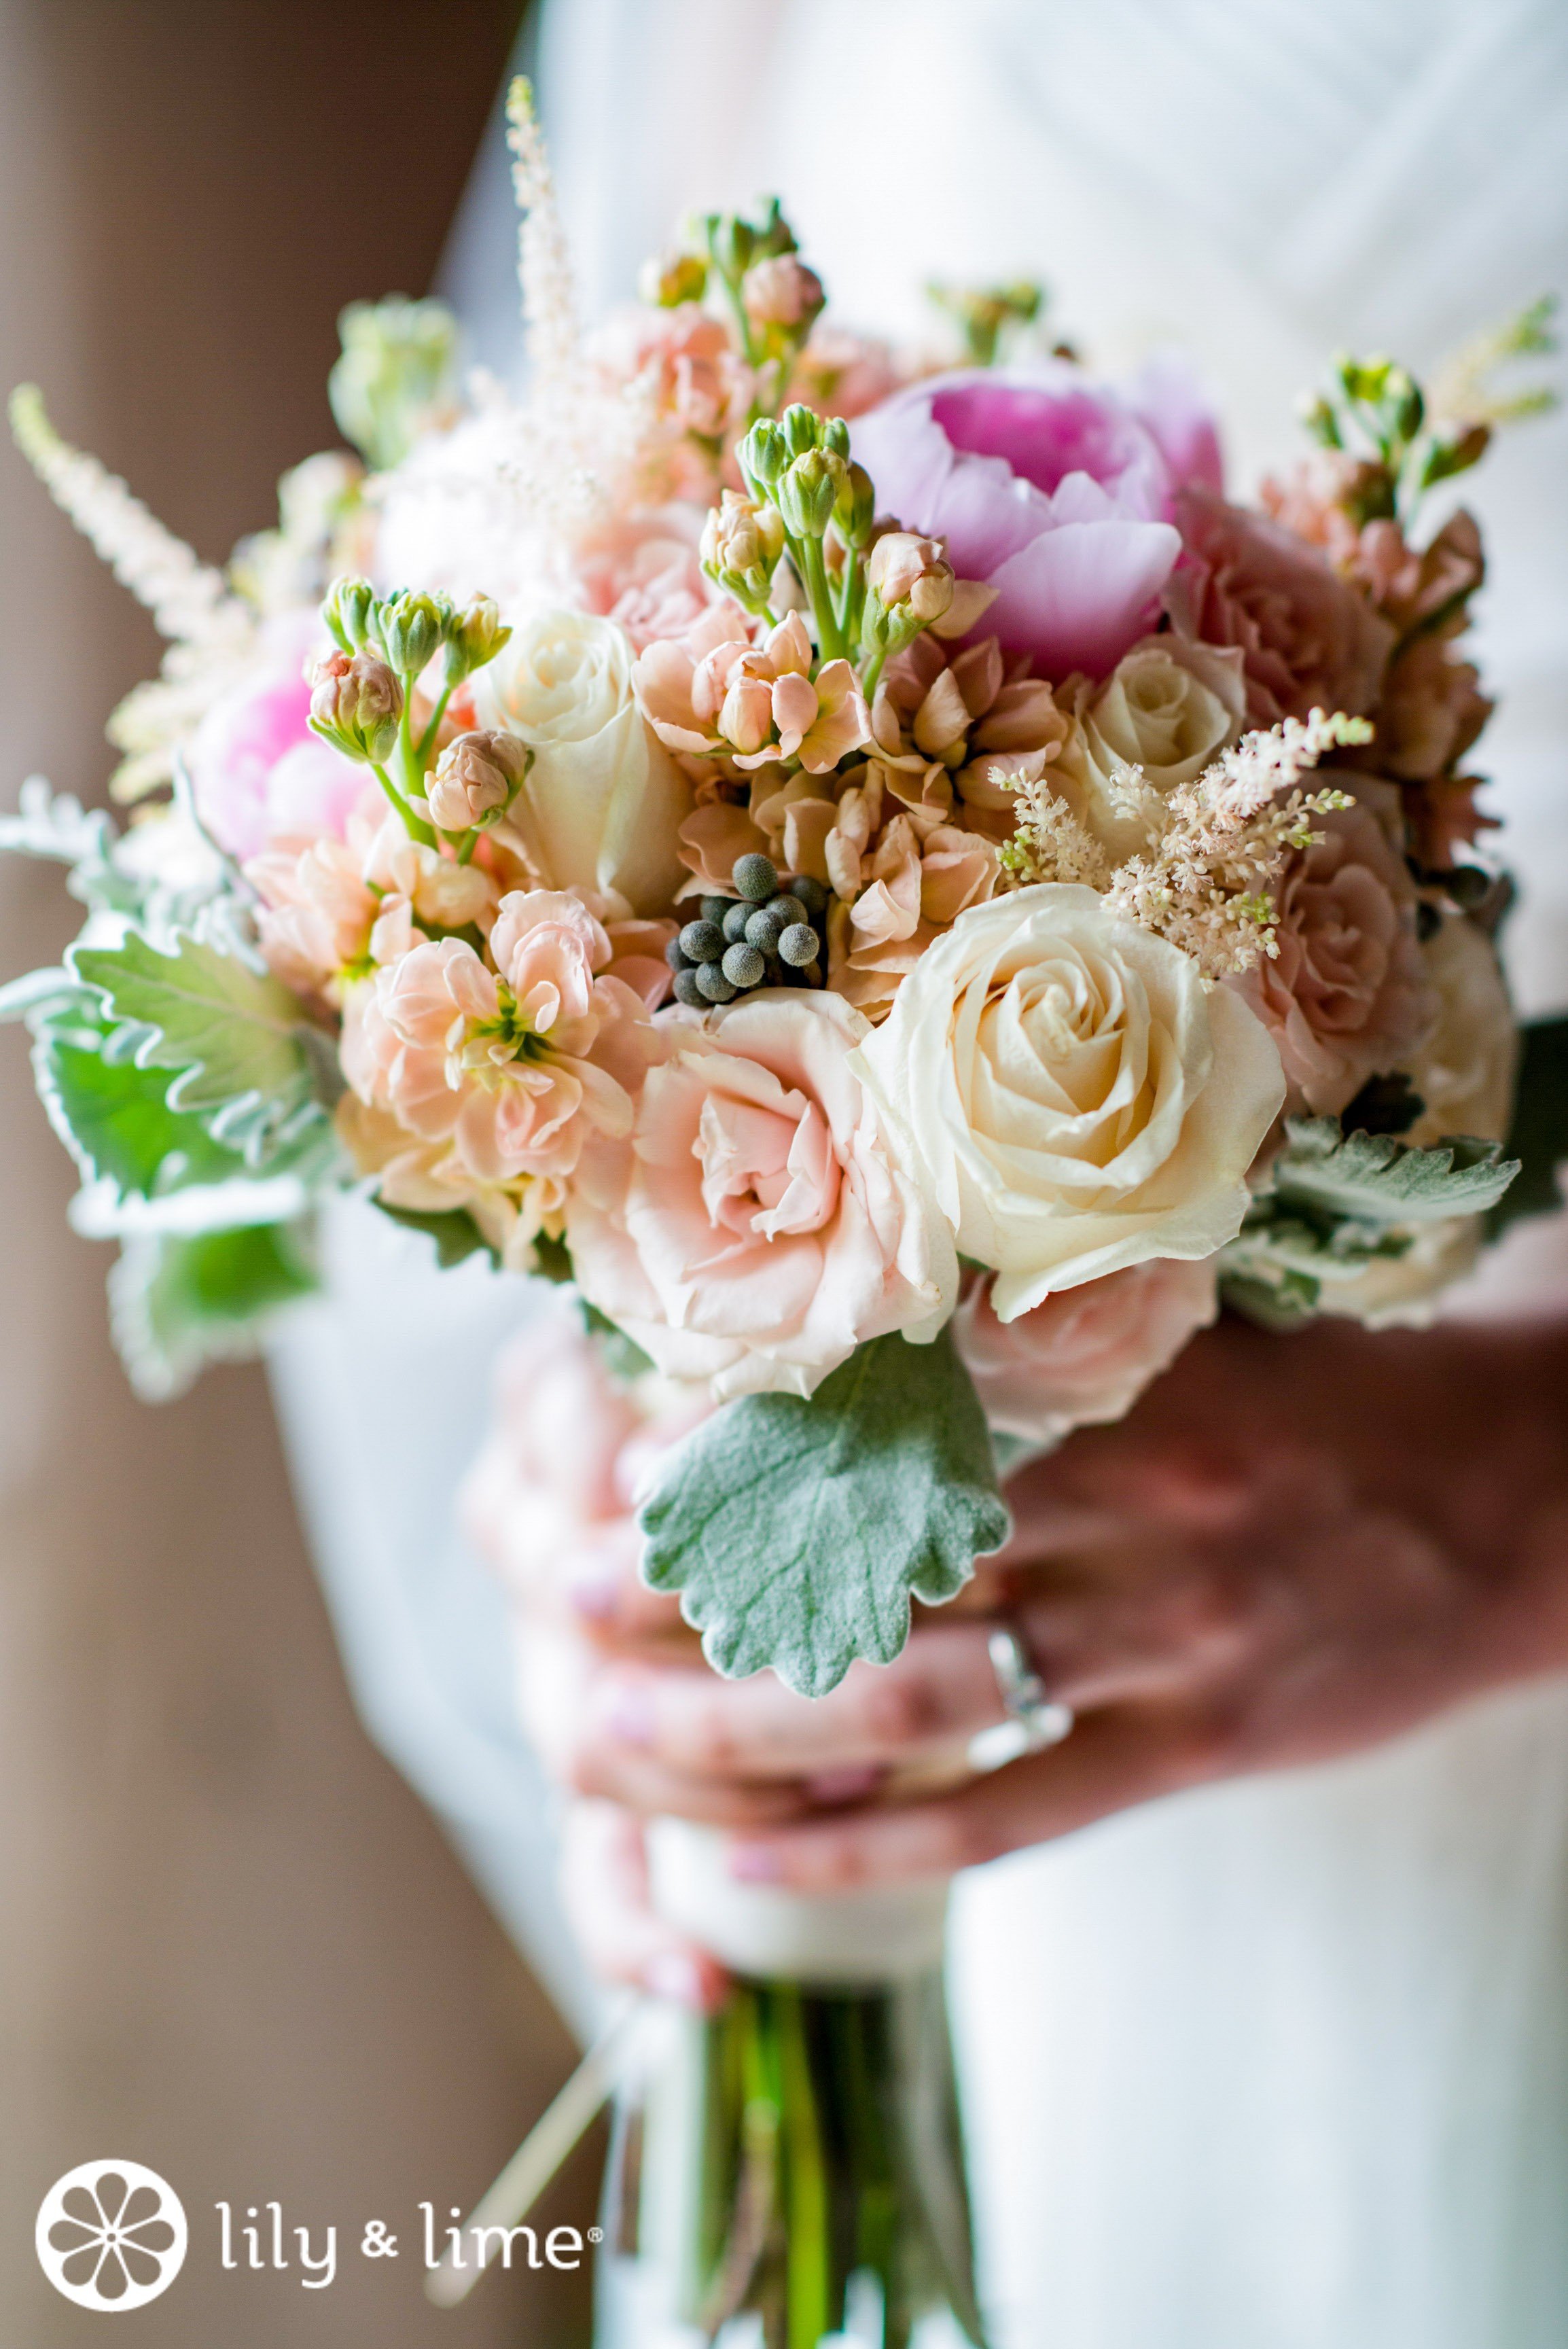 Bridal Bouquet, Bridal Accessories, Wedding Bouquet, Wedding Flower, Bridal  Flower, Dried Bridal Bouquet, Wedding Accessories 